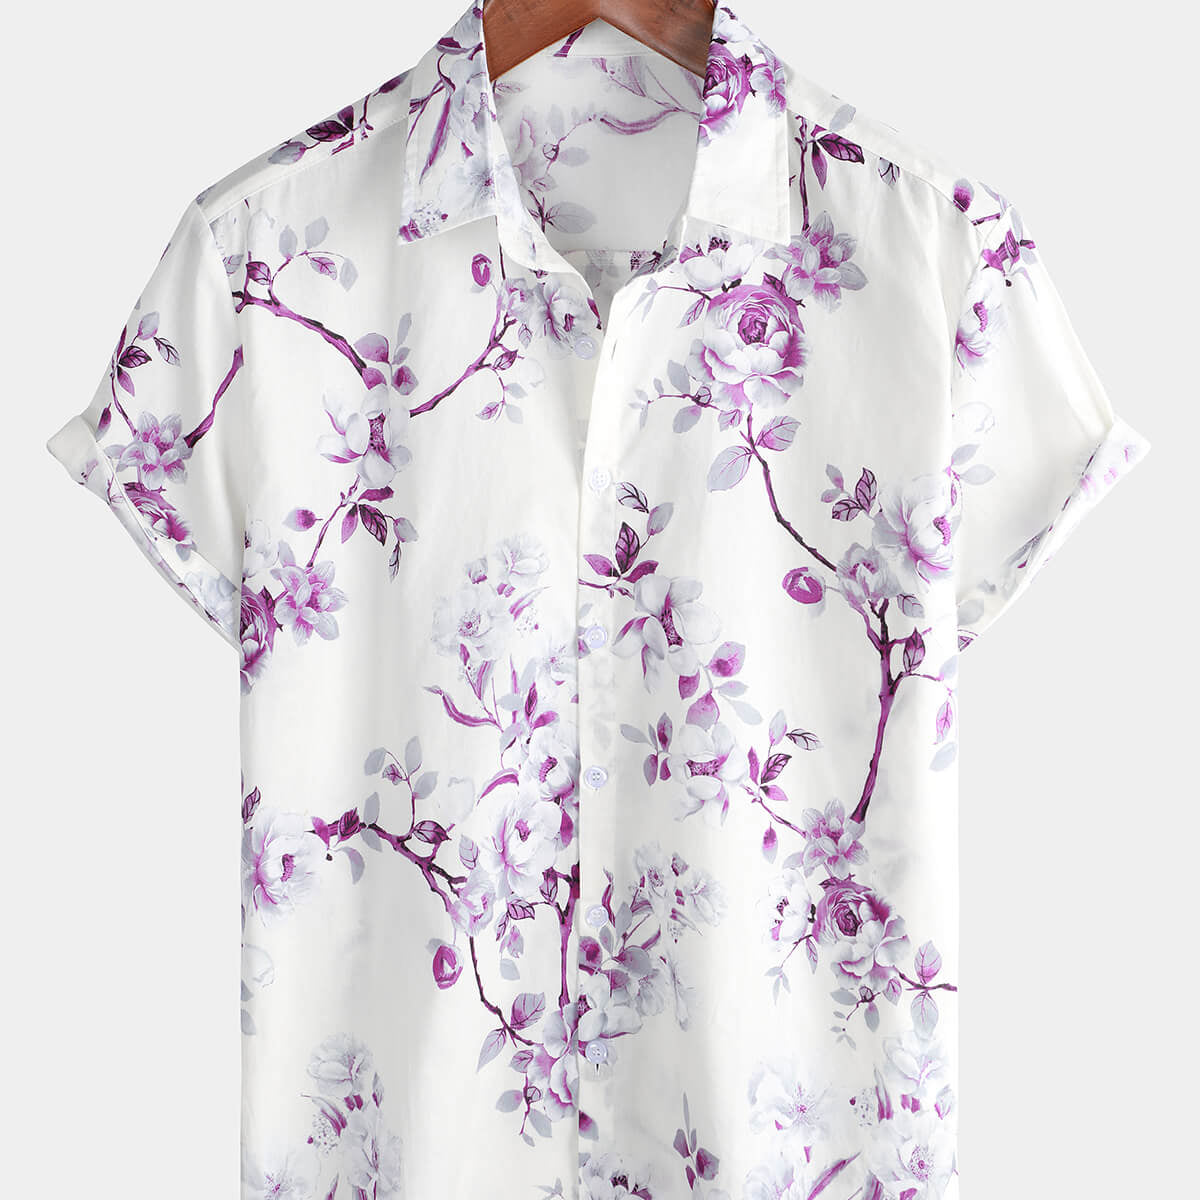 Men's Floral Casual Summer Cotton Short Sleeve Button Up Shirt